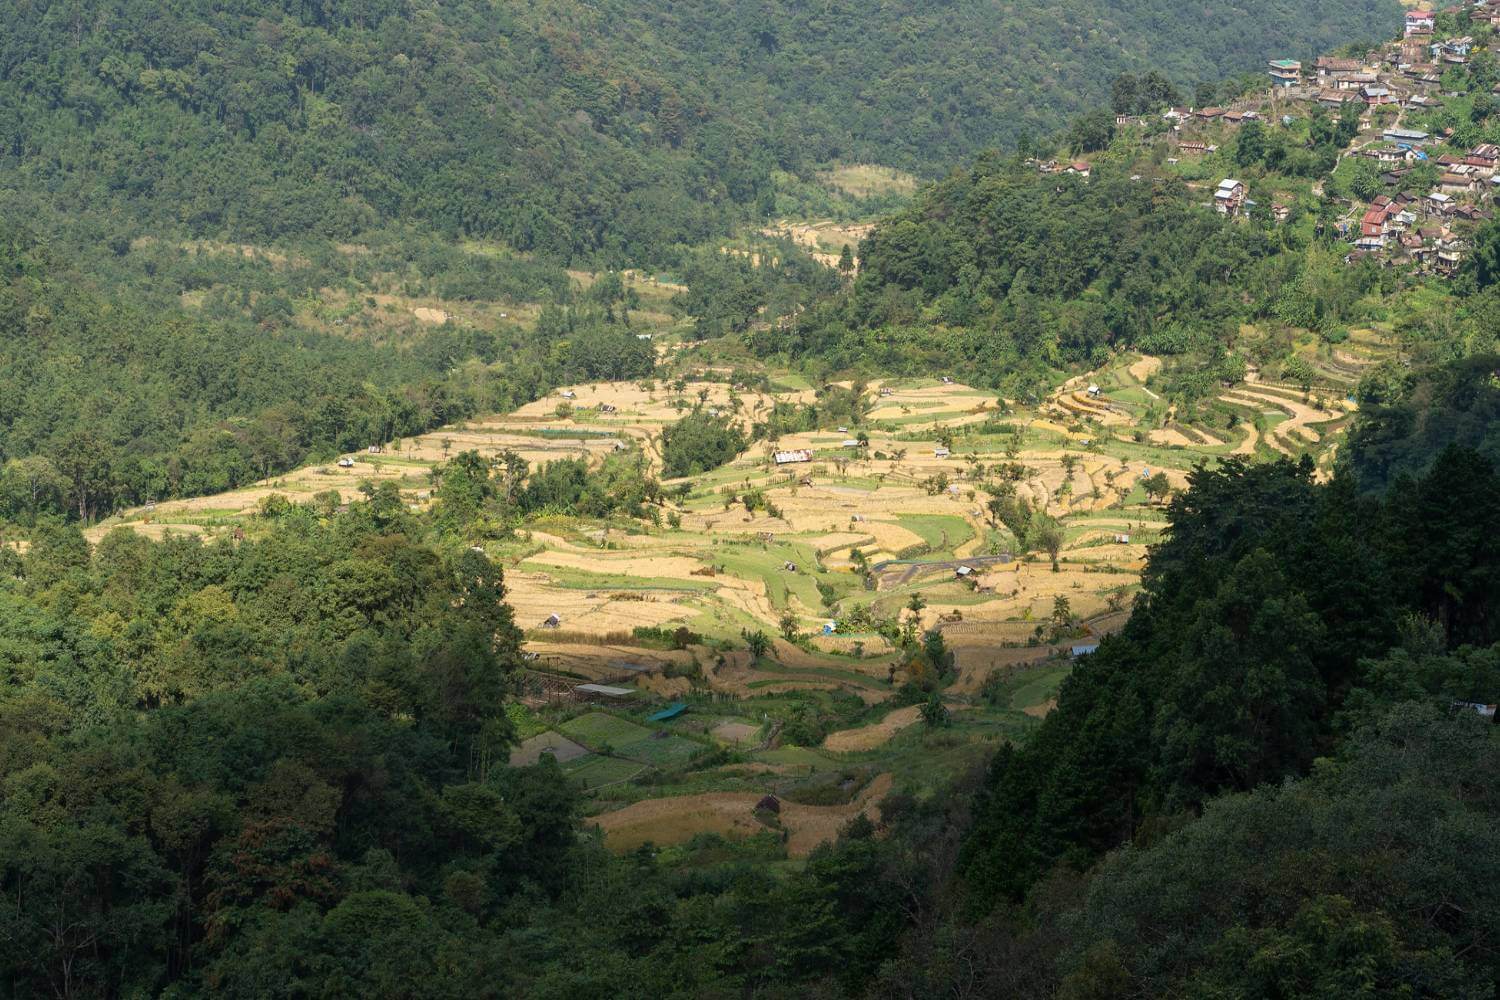 Khonoma Green Village Nagaland